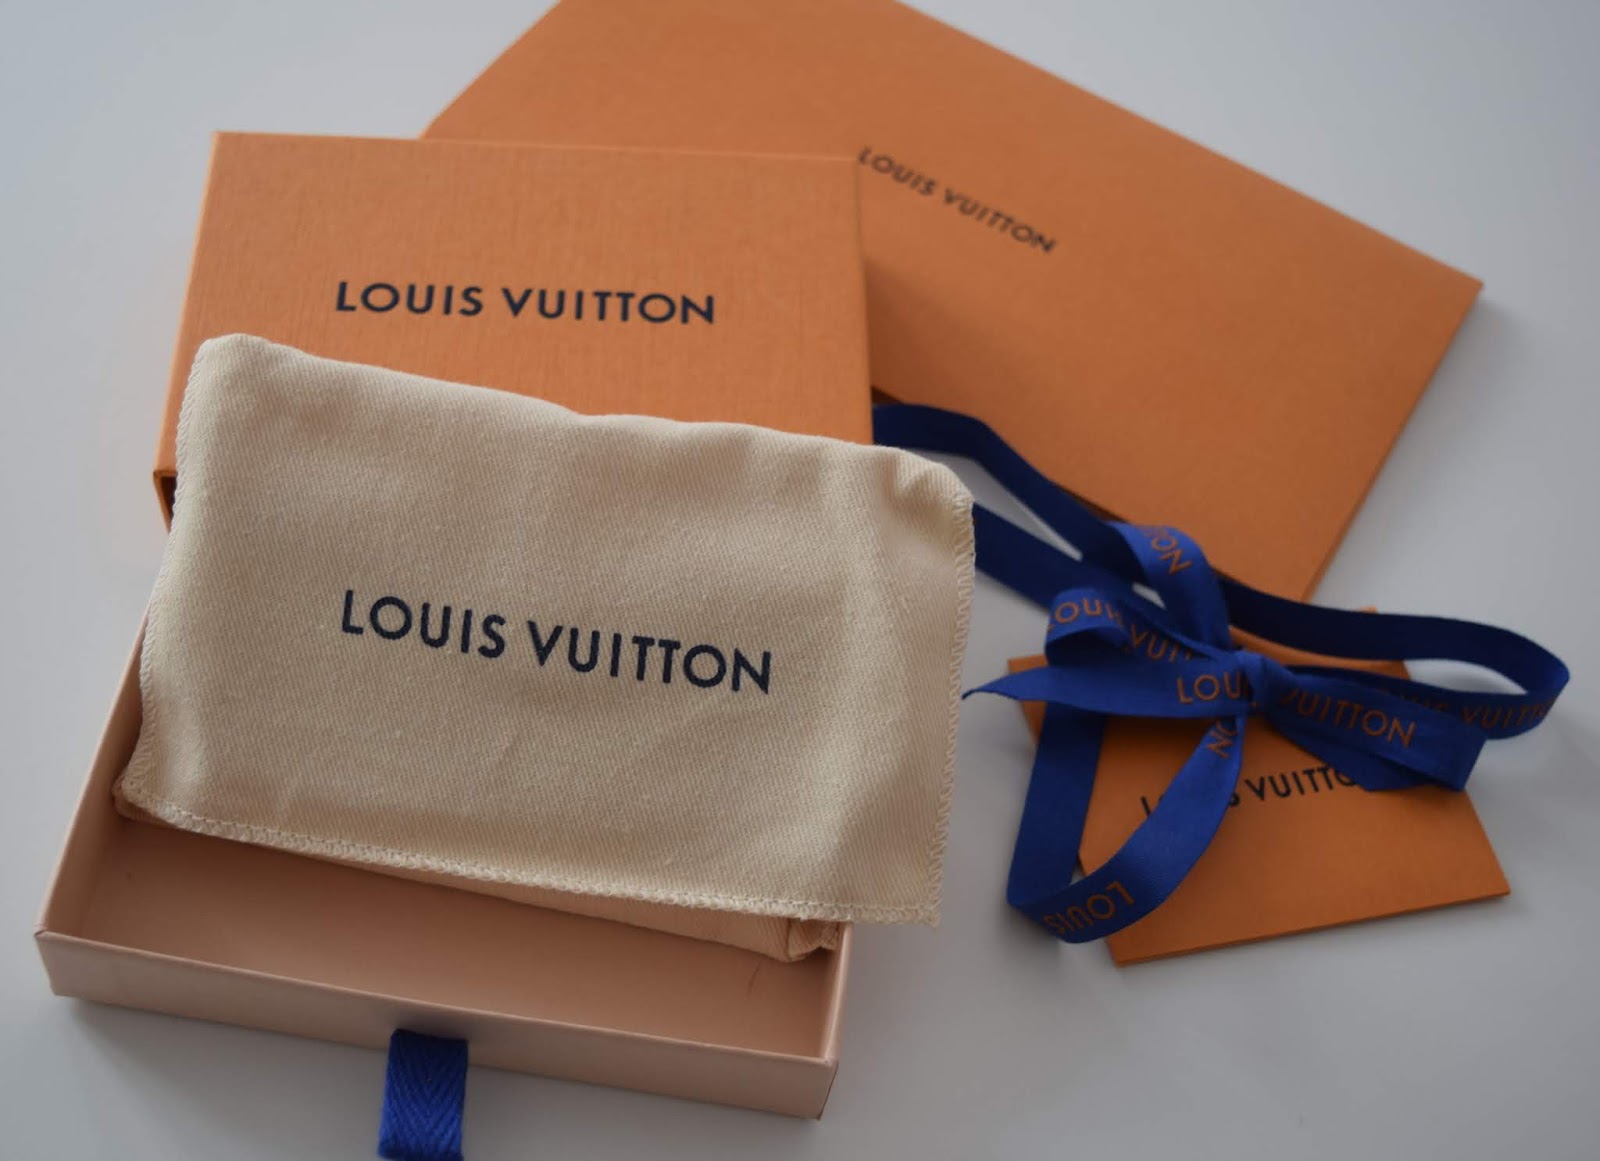 My First Louis Vuitton Handbag Unboxing!!! My Biggest Splurge! 